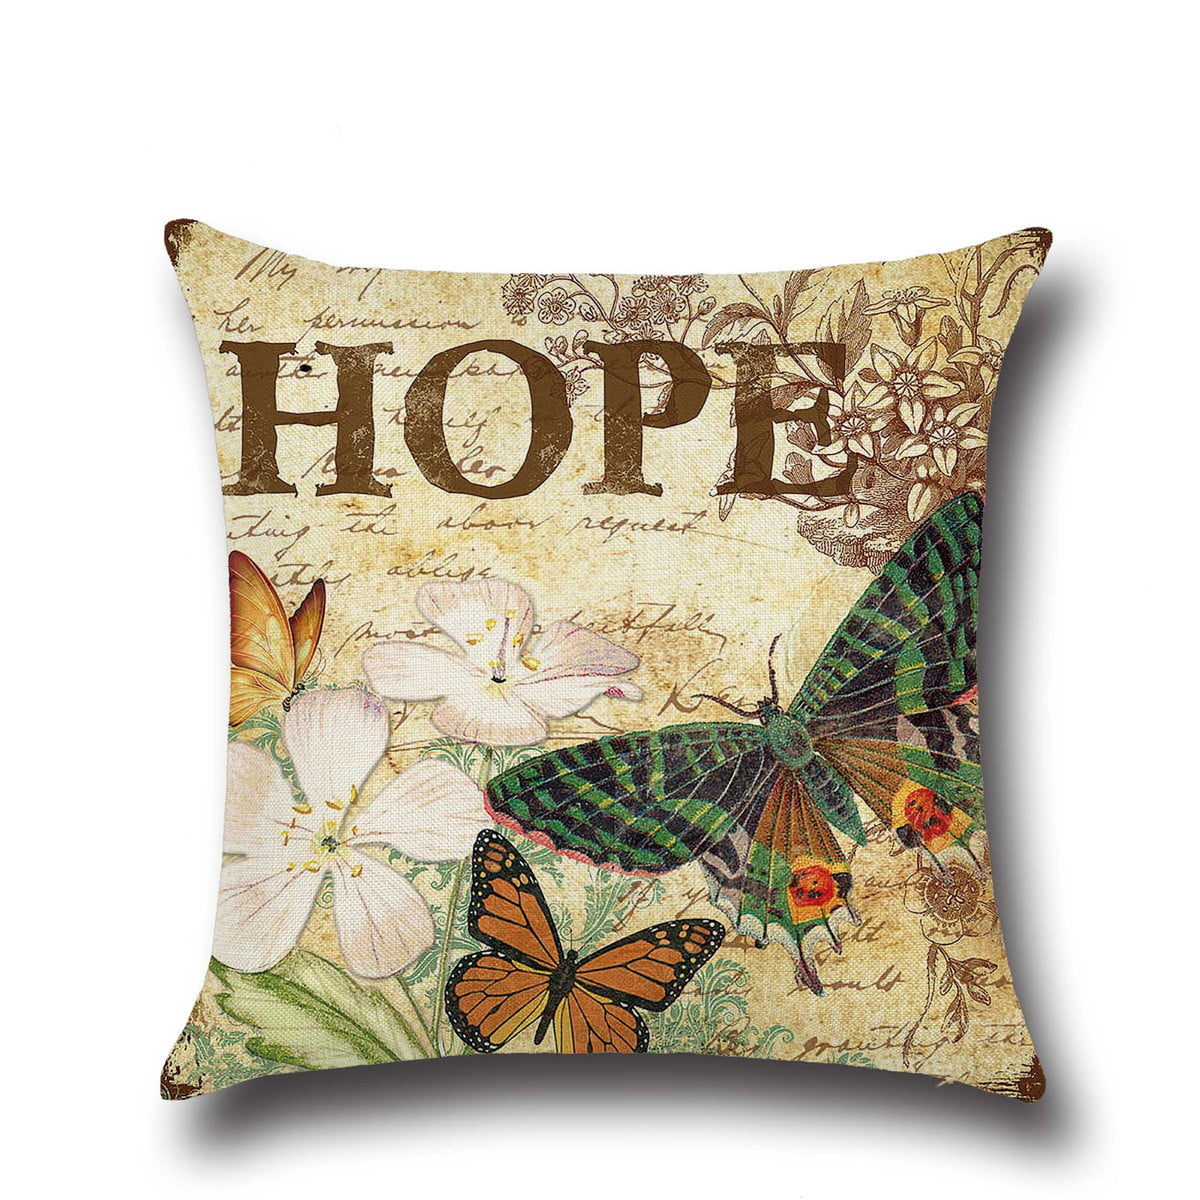 Cotton Linen 18" Butterfly Pattern Sofa Decor Throw Pillow Case Cushion Cover